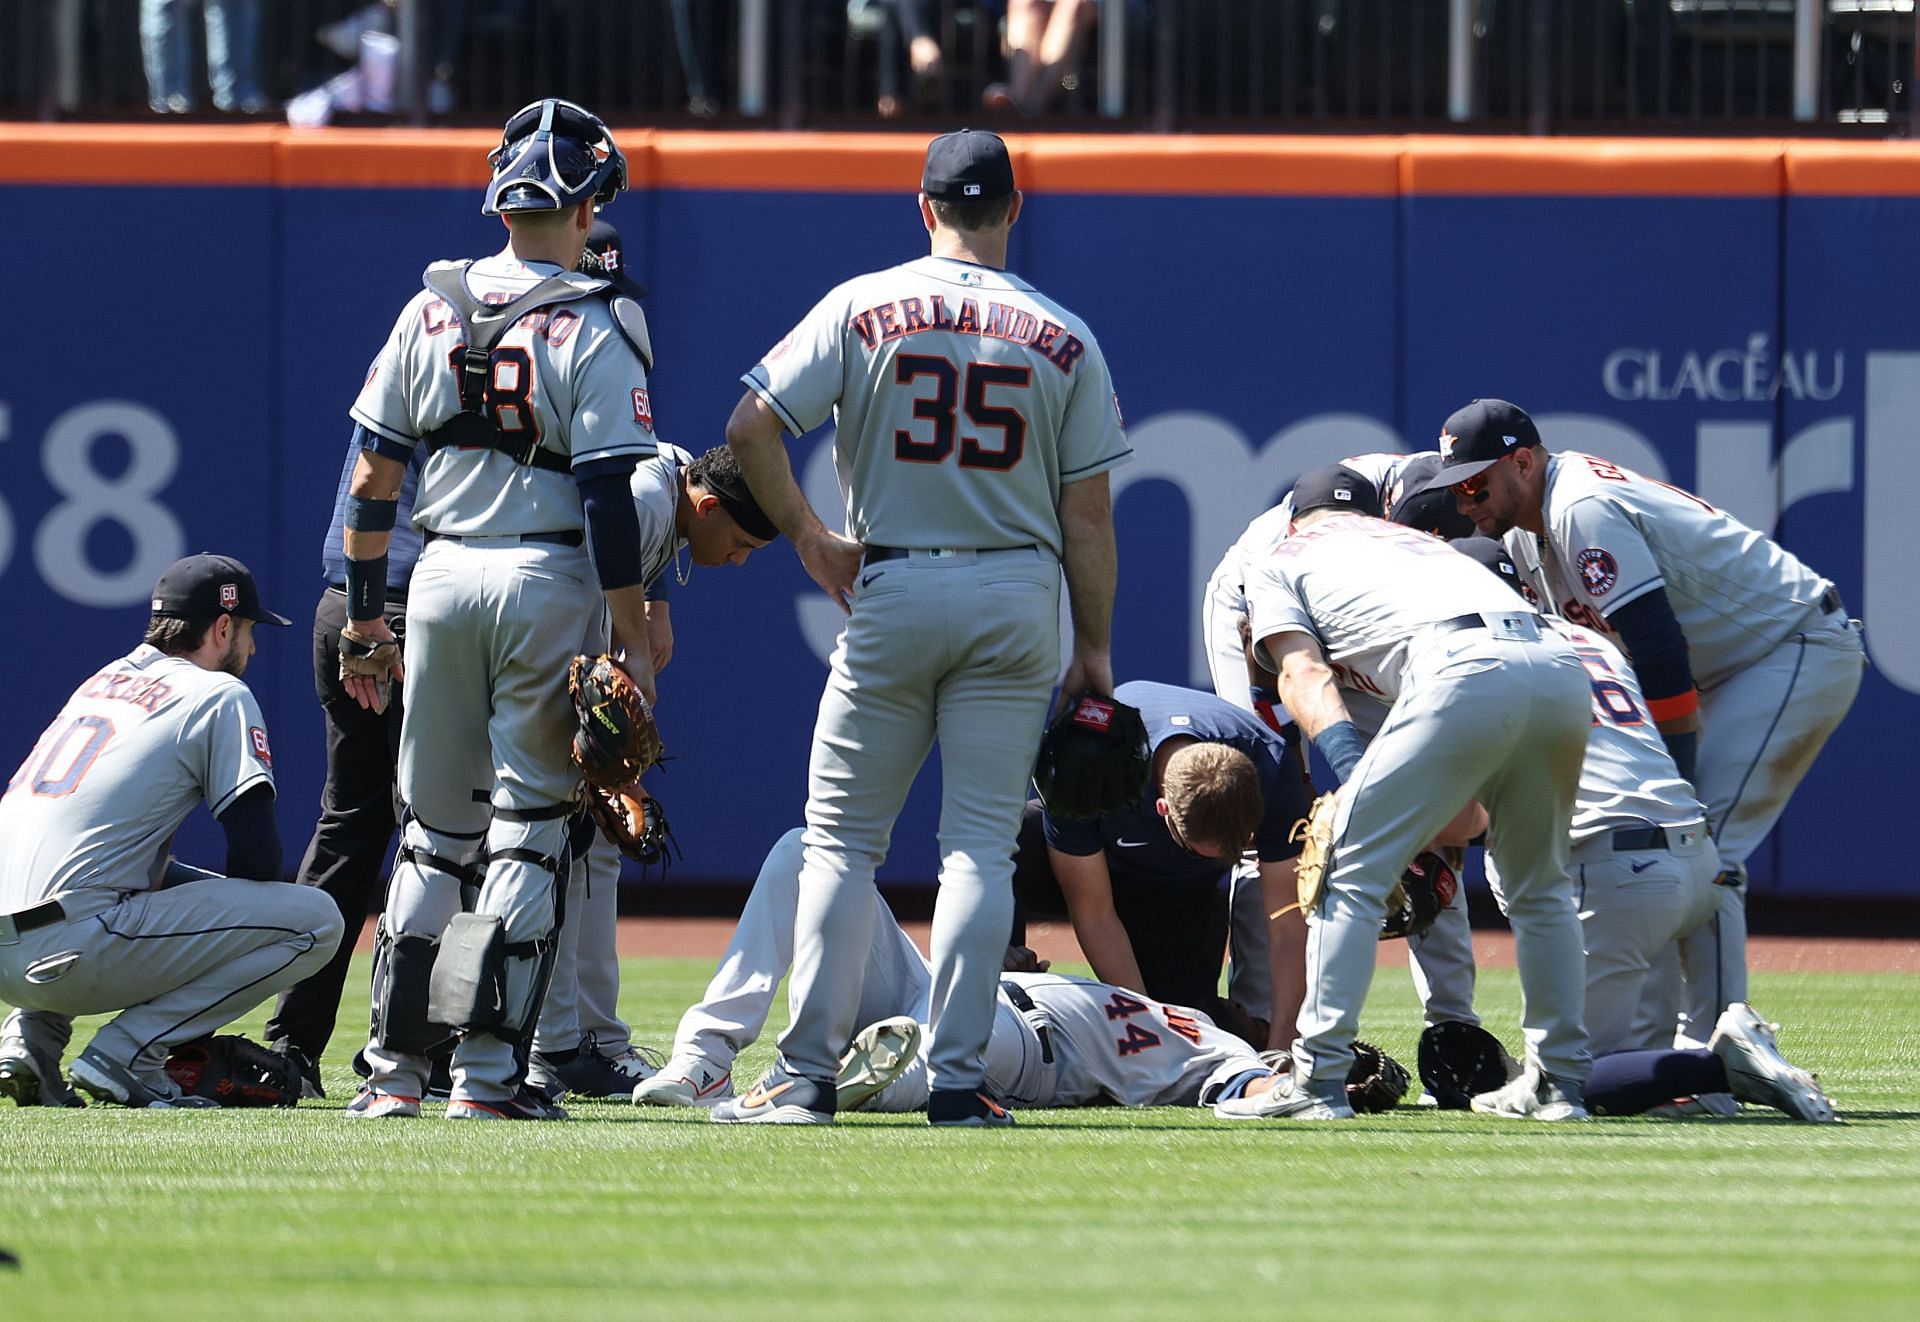 Astros star Alvarez back at ballpark after breathing scare